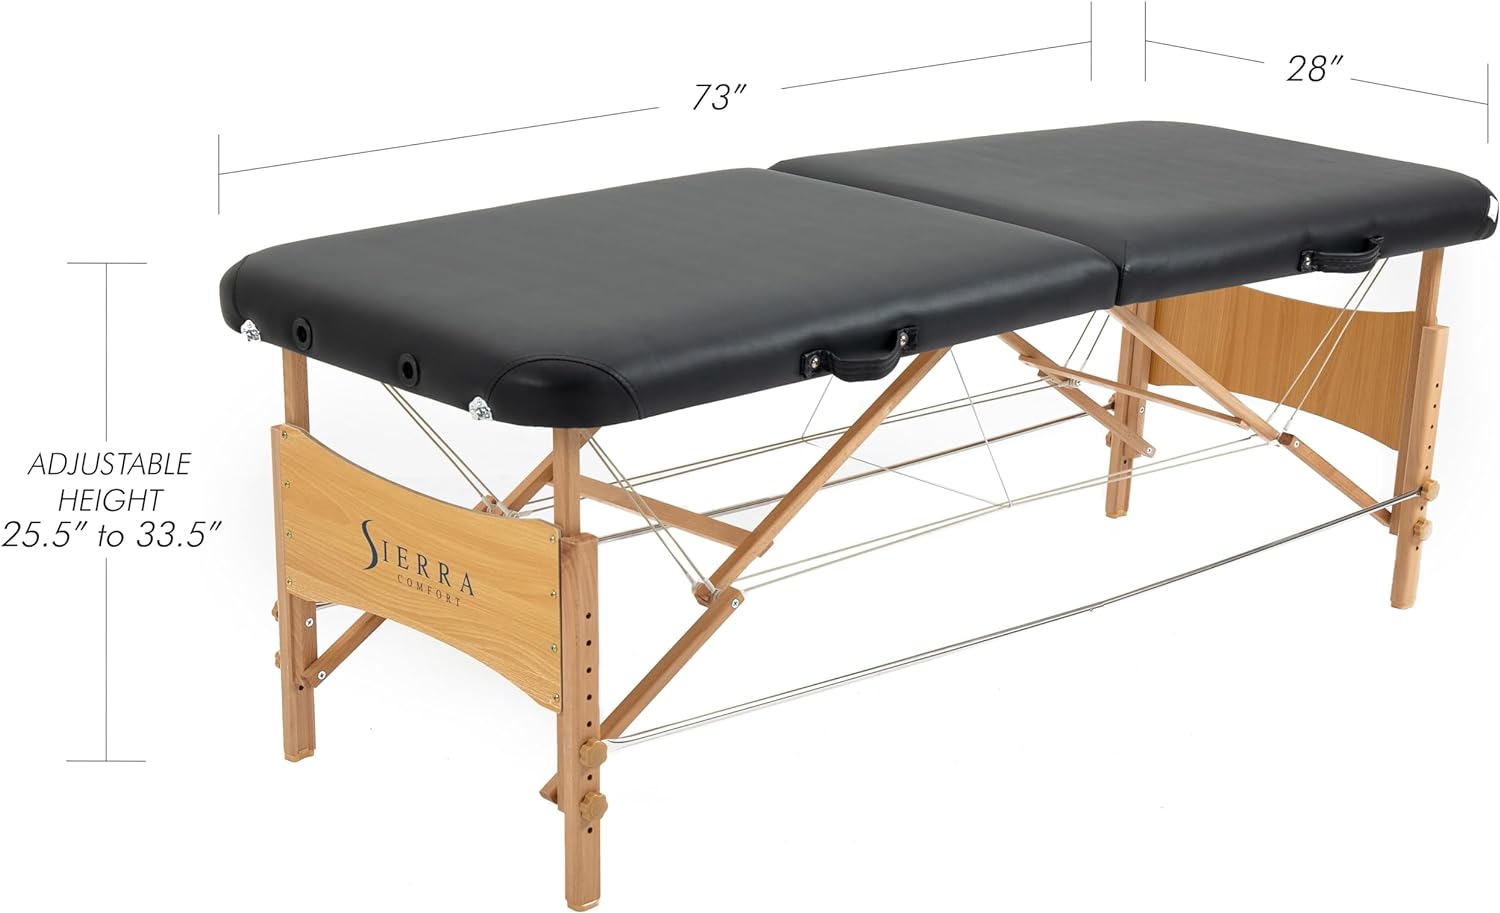 SIERRA COMFORT All-Inclusive Portable Massage Table